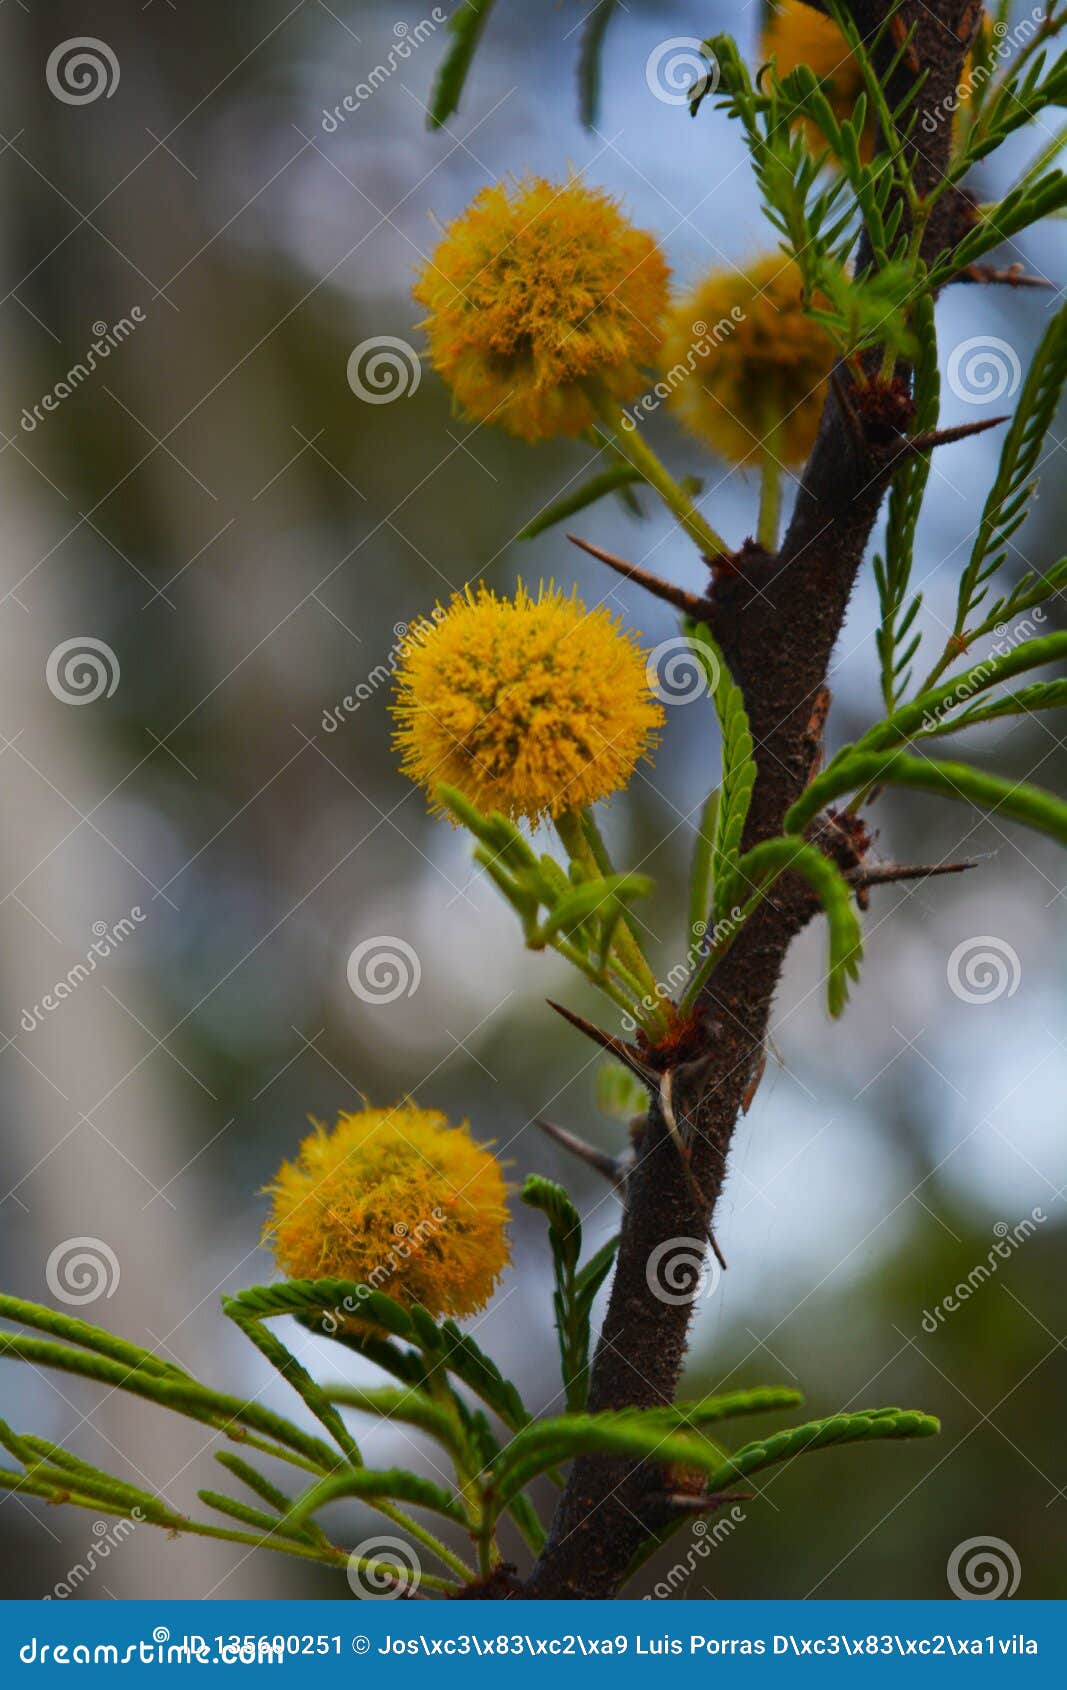 little yellow flowers similar to diente de leon2